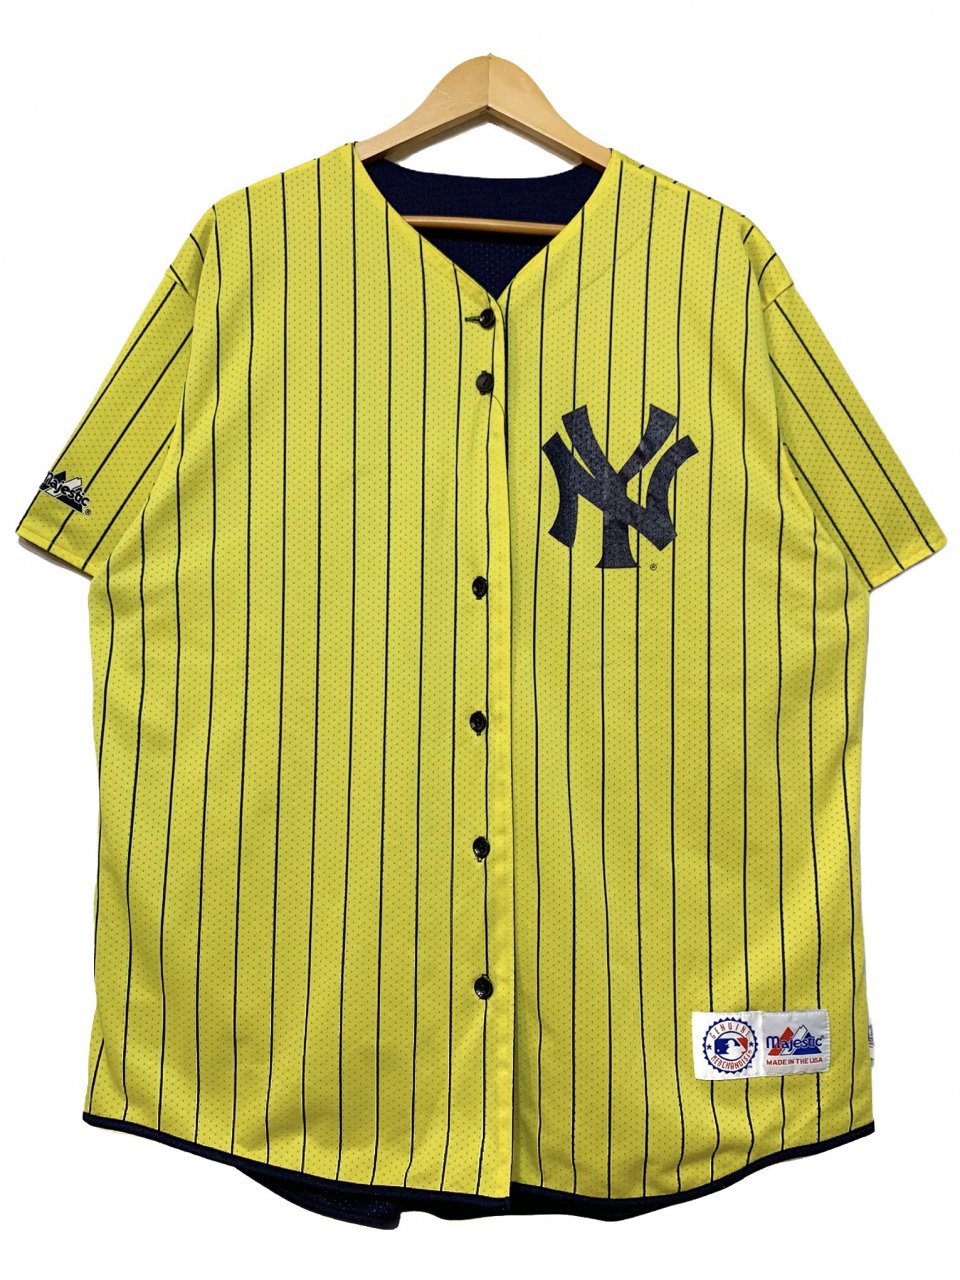 MLB ニューヨーク・ヤンキース リバーシブル ユニフォーム ベースボールシャツ